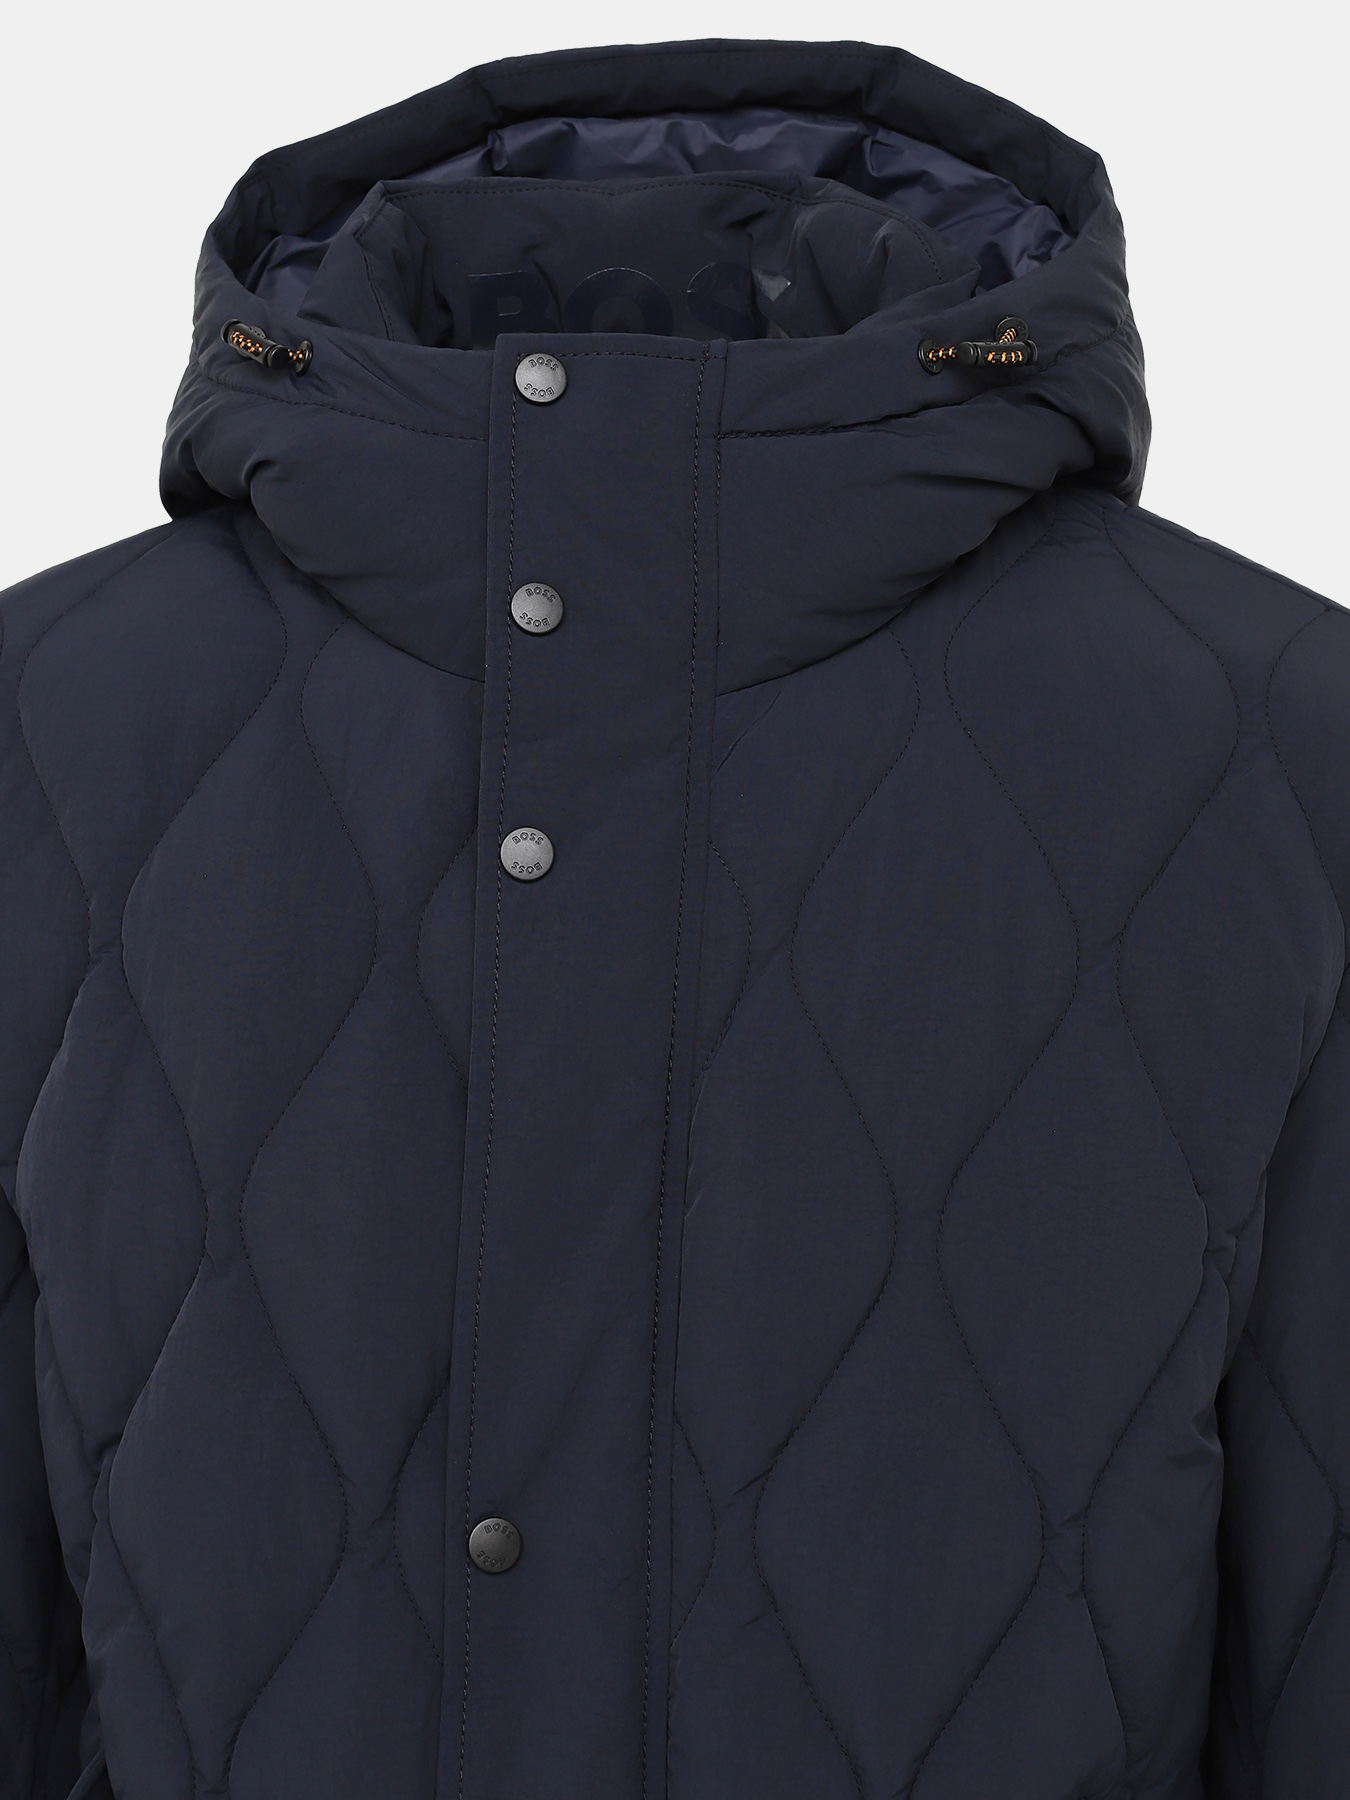 Куртка Onlet BOSS 424685-027, цвет темно-синий, размер 52 - фото 4